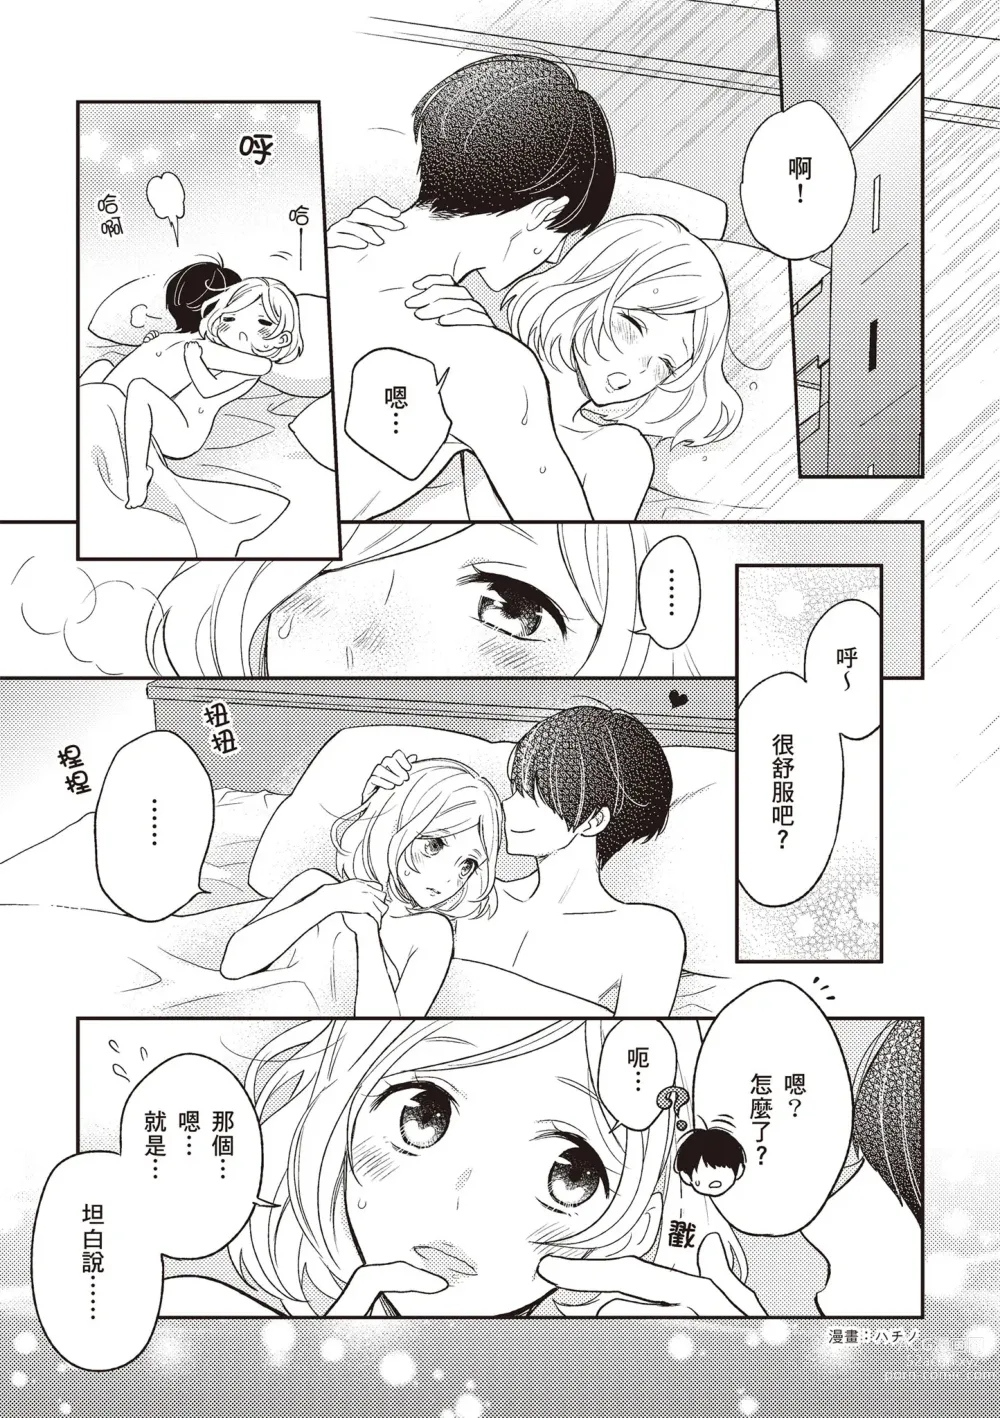 Page 2 of manga 內部攻略！圖解陰道快感開發･高潮完全指南